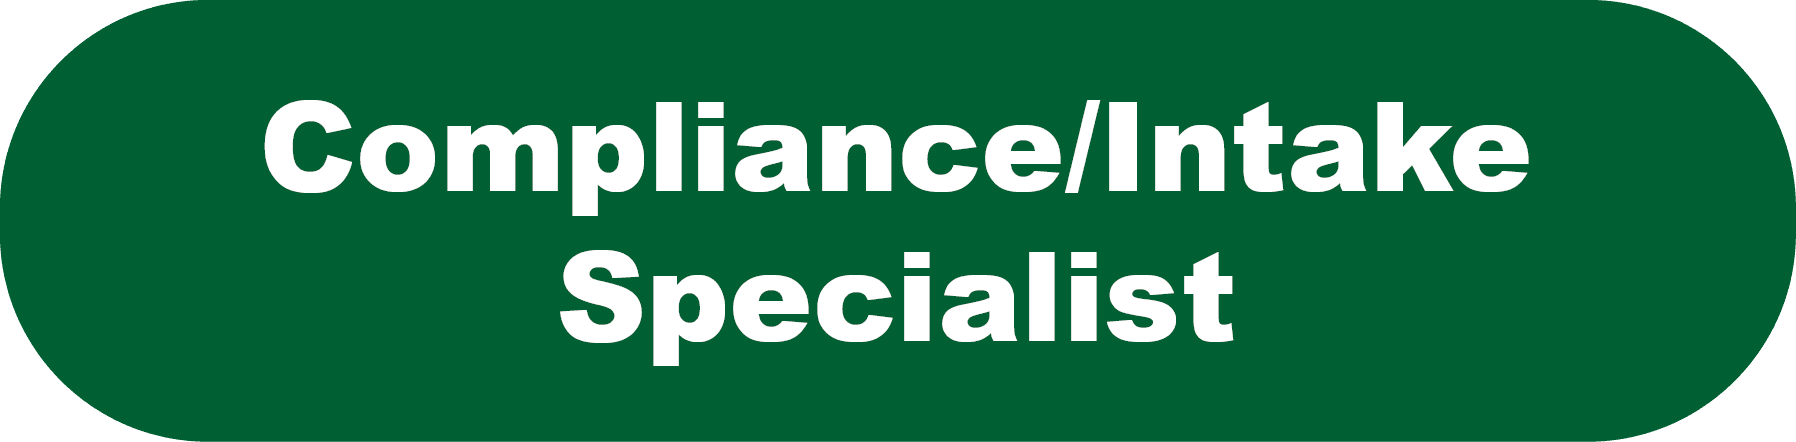 Compliance/Intake Specialist